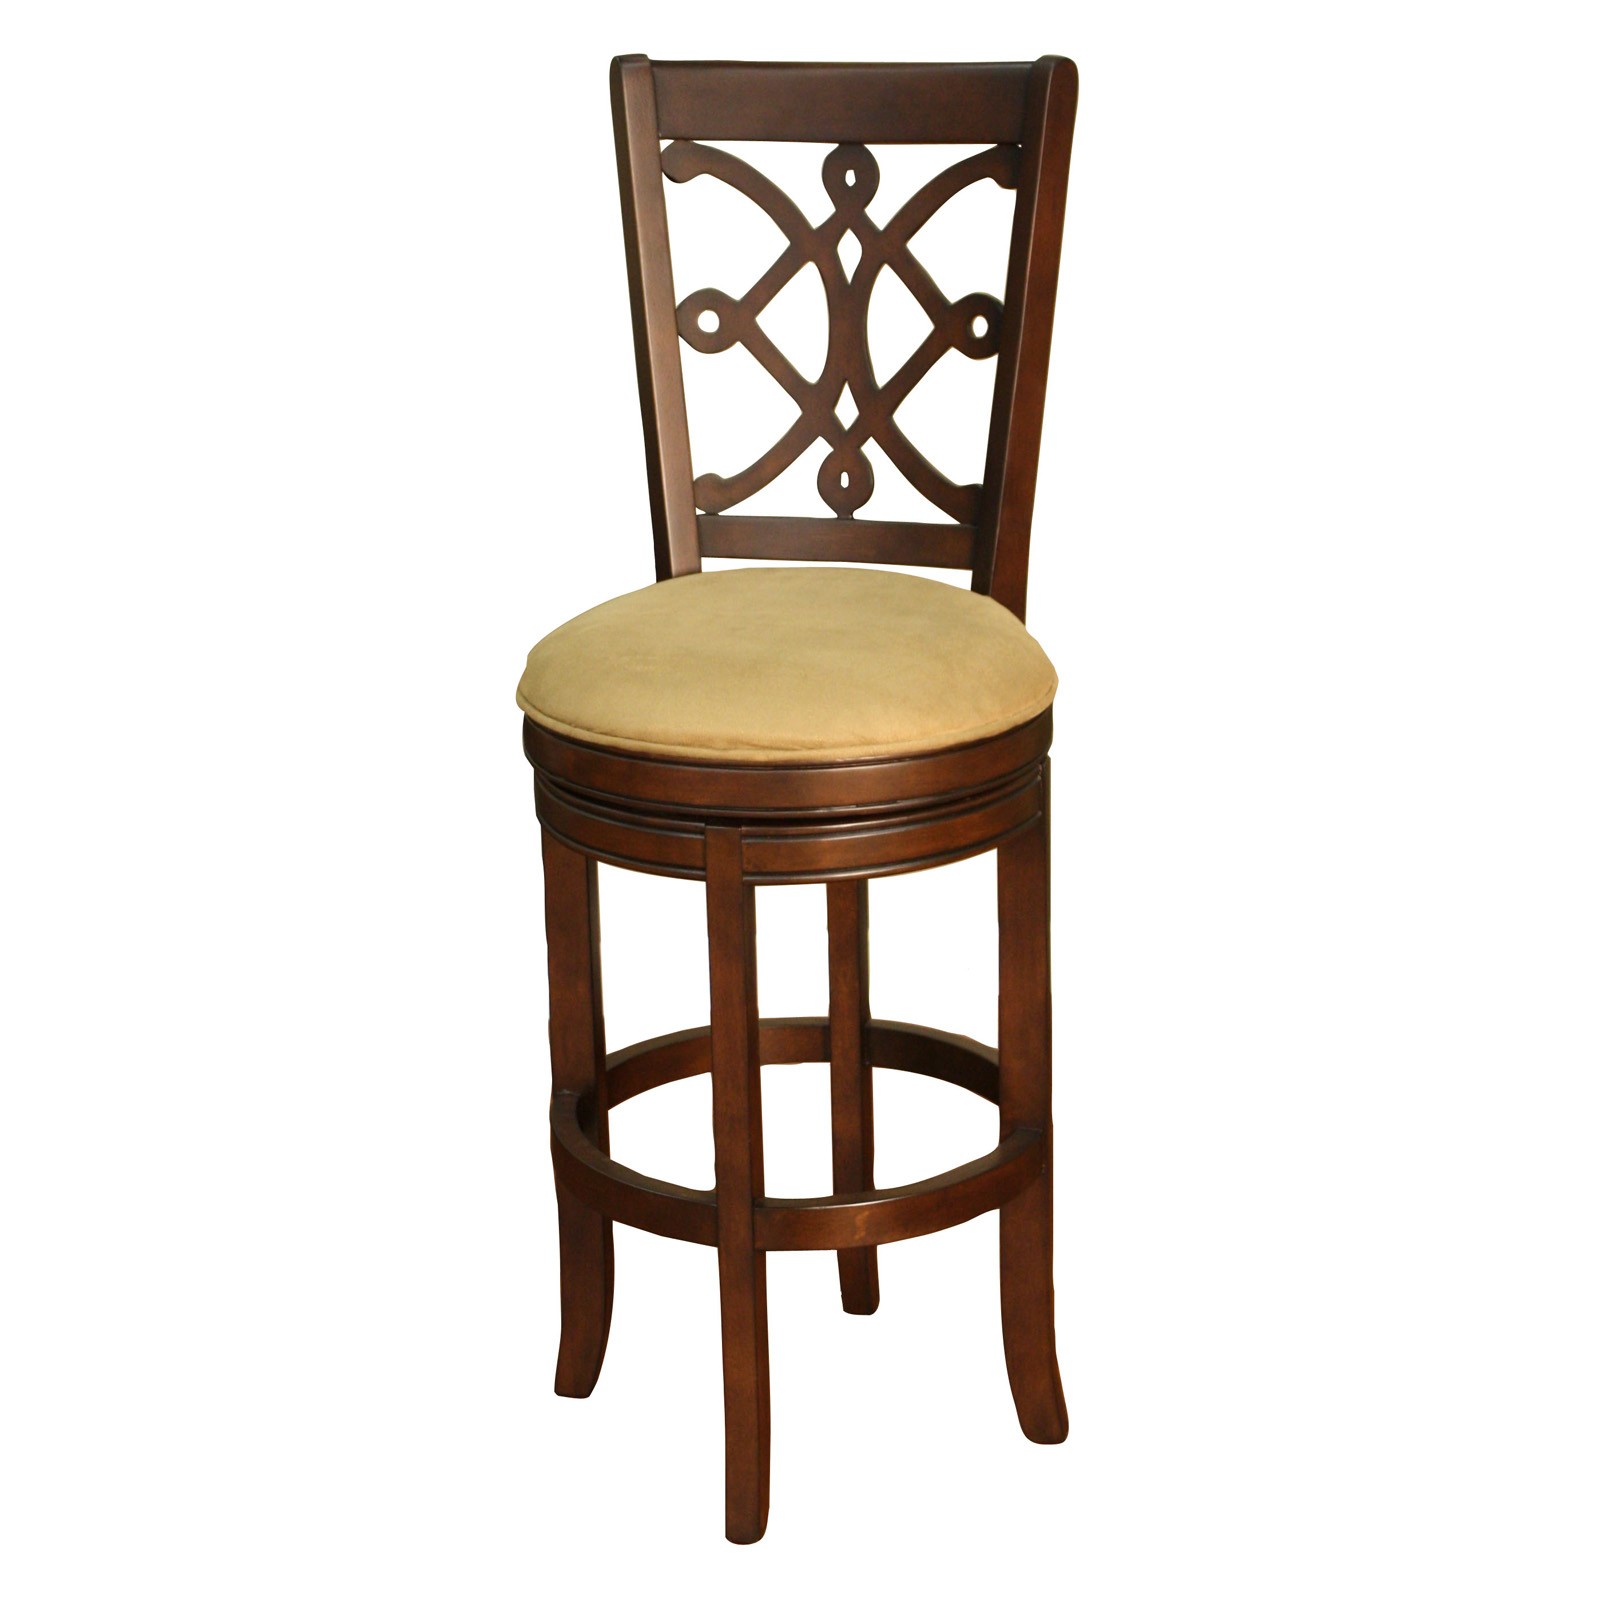 Beautiful swivel bar stool with tuscan style mocha wood finish